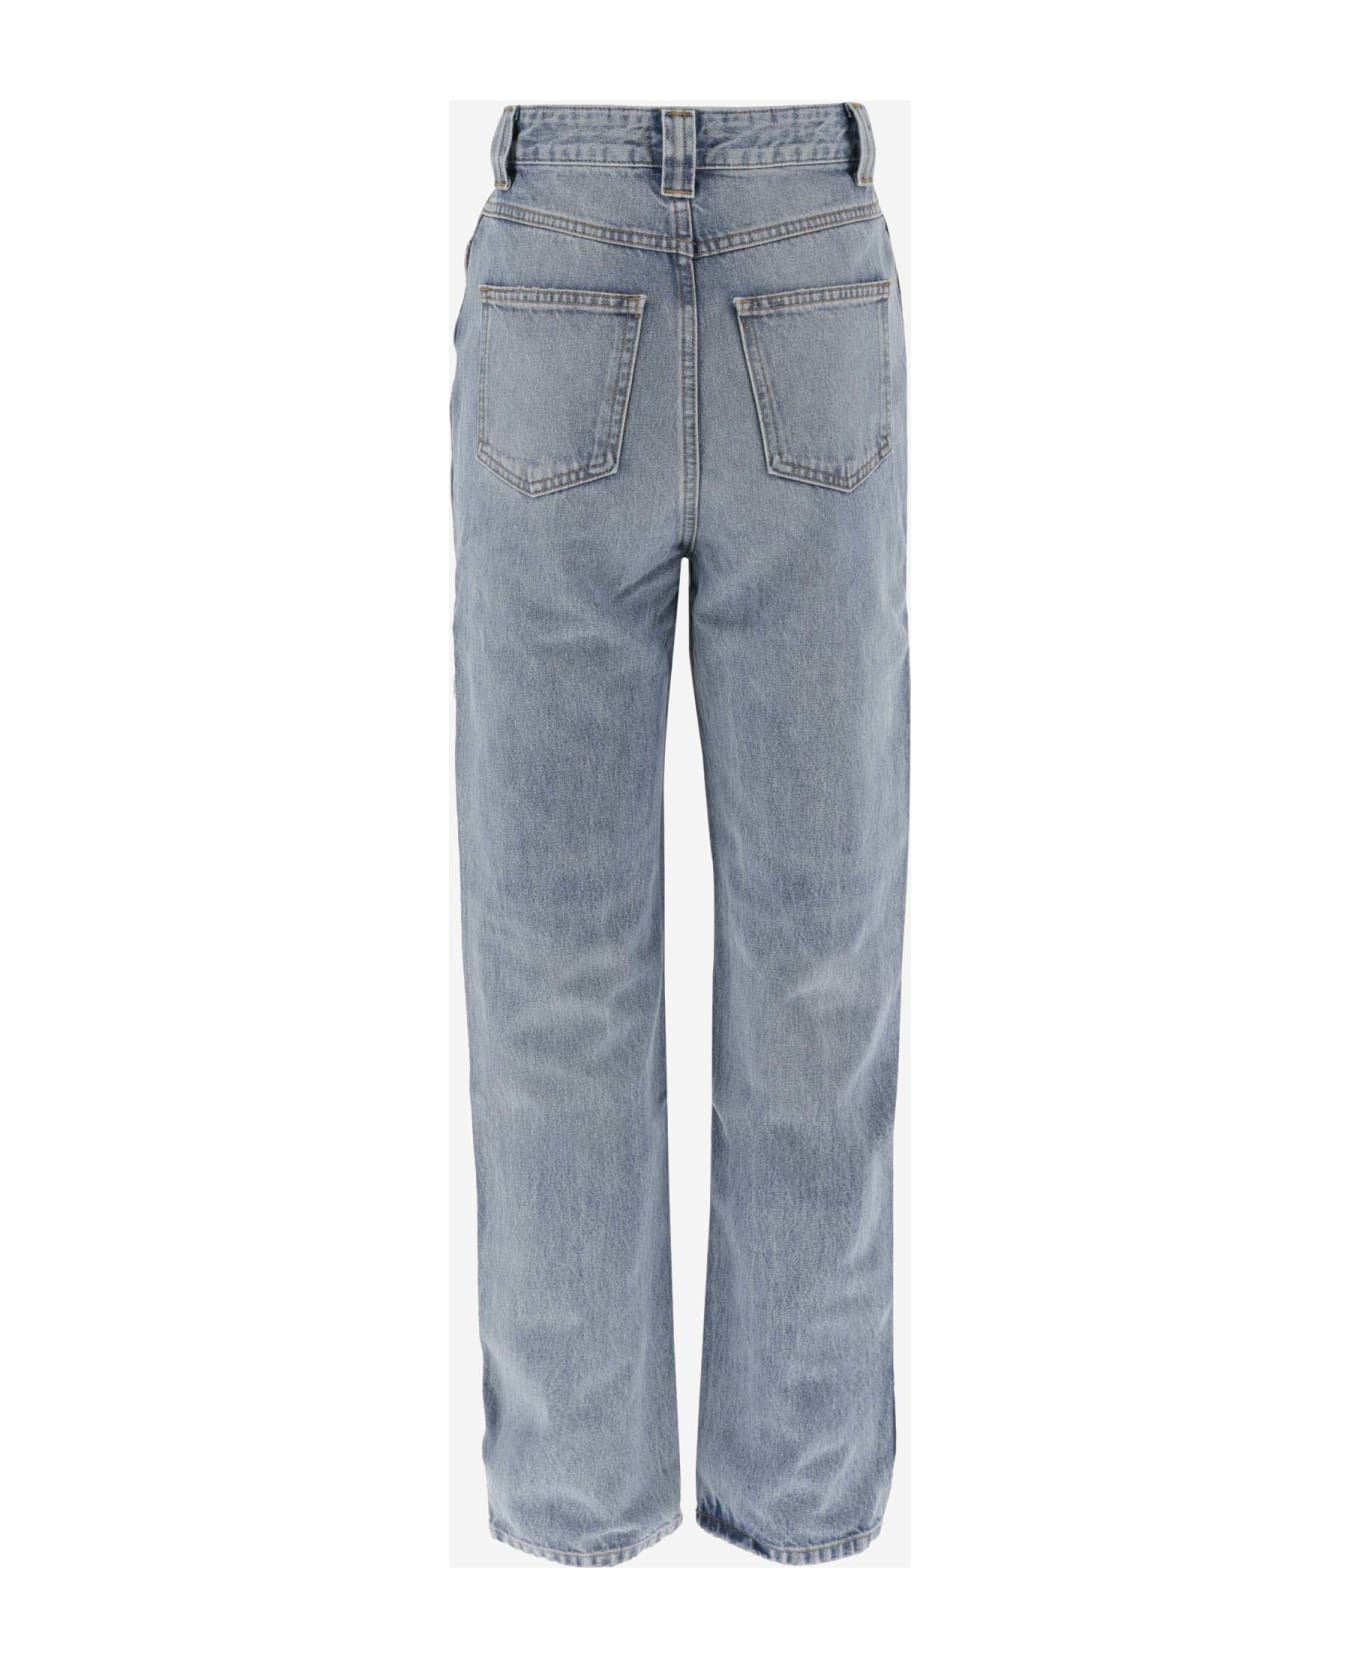 Khaite High Waist Denim Jeans - Bryce